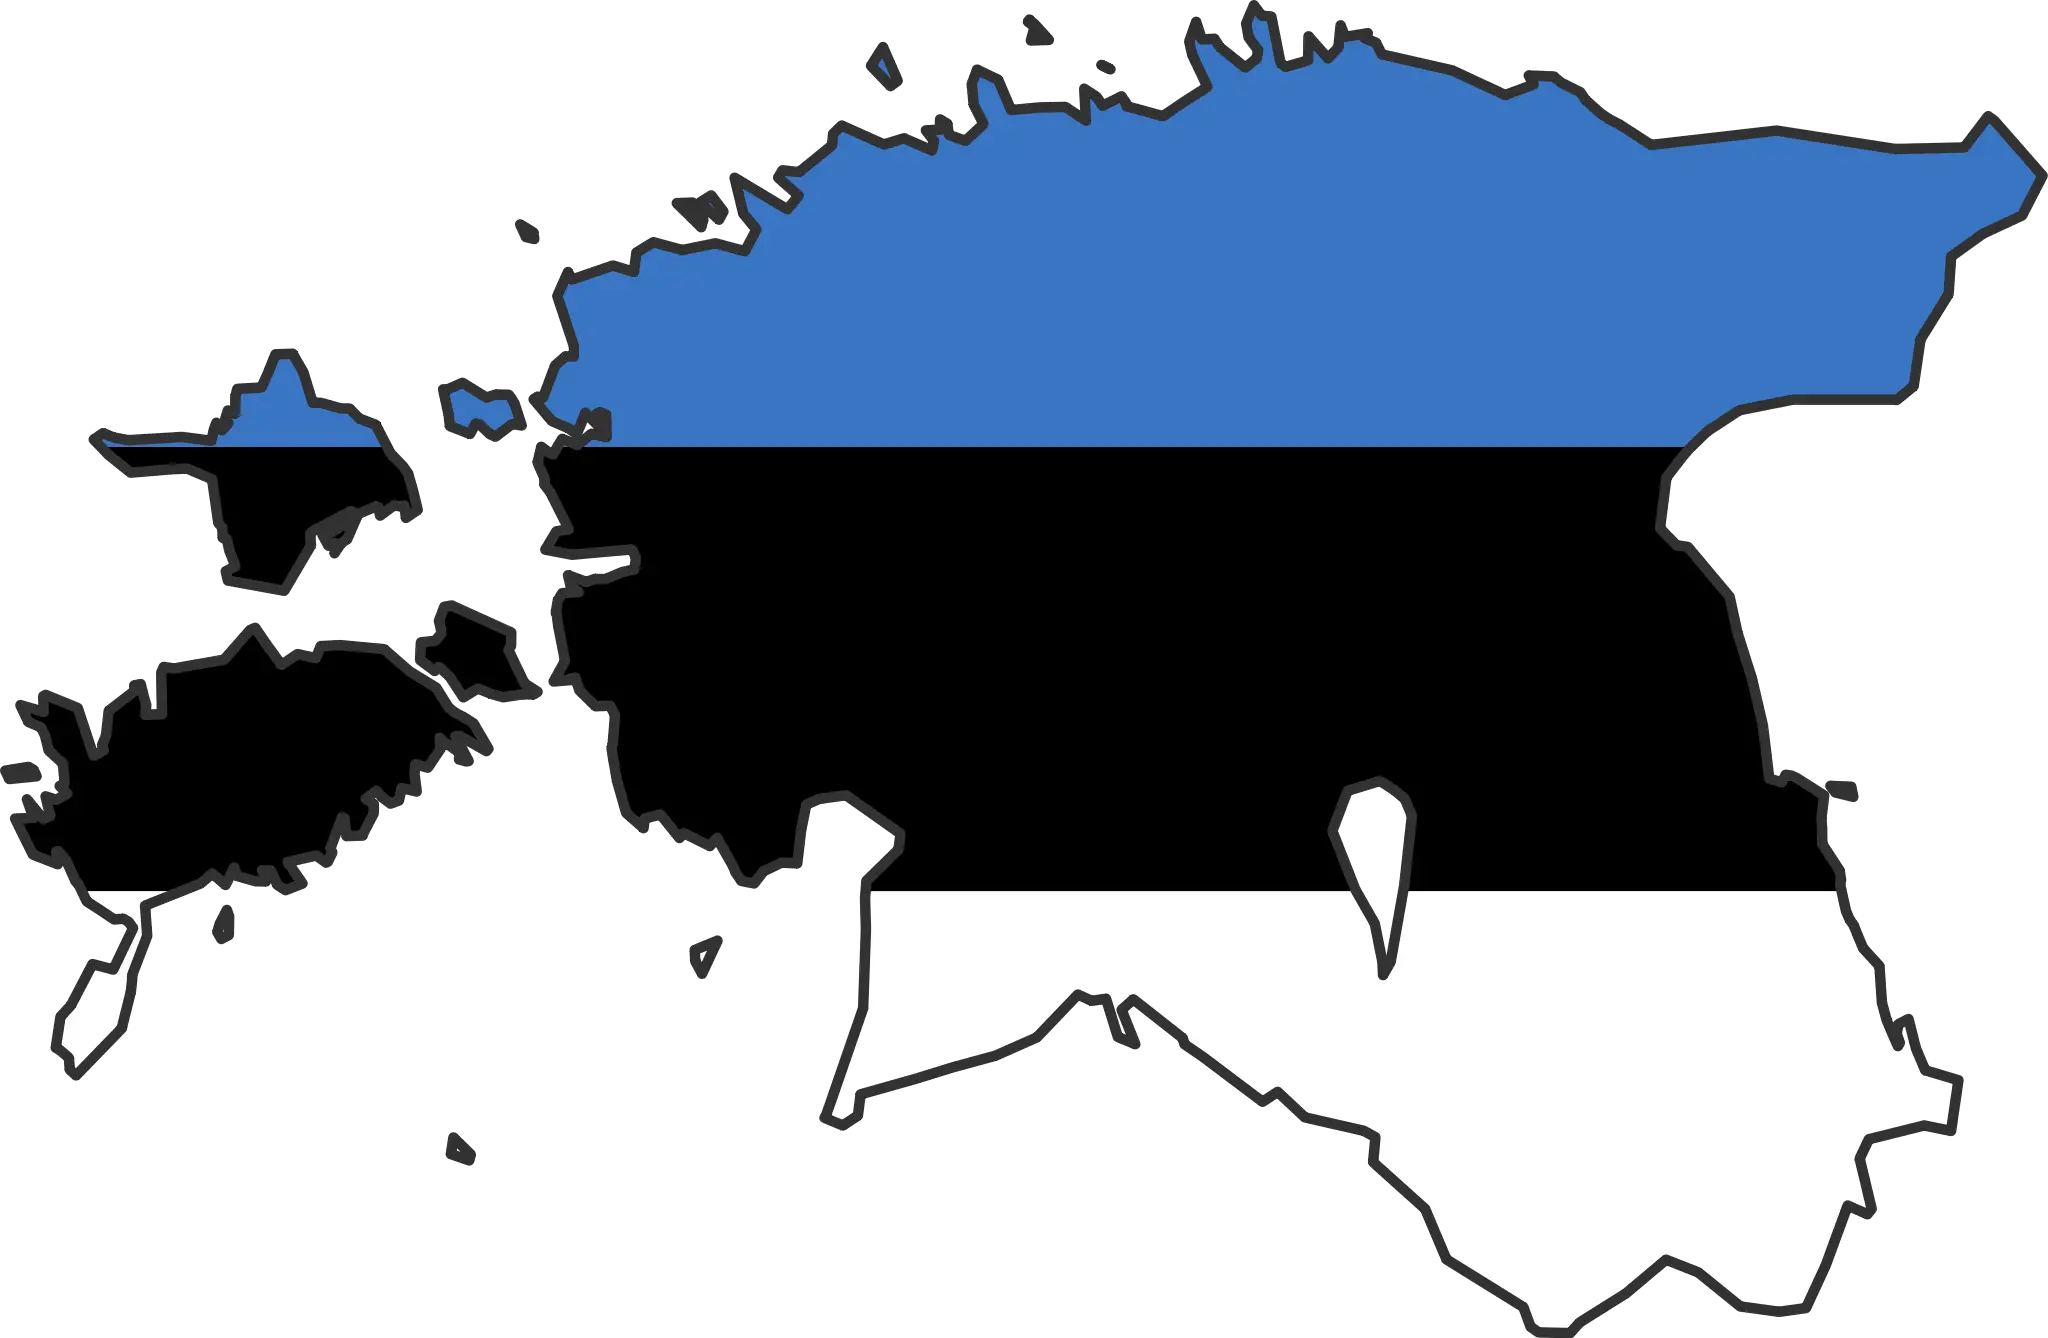 Estonia Flag Map • Mapsof.net